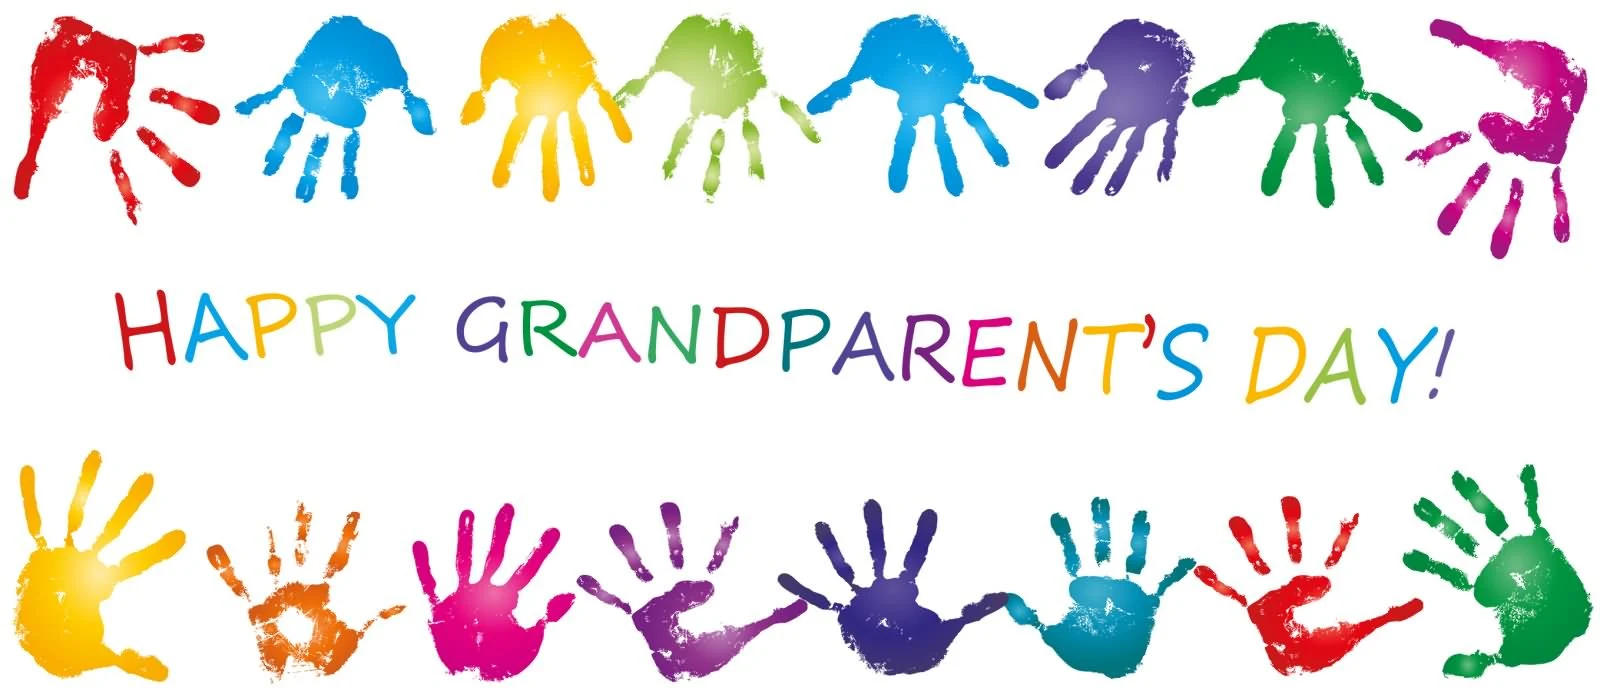 Happy-Grandparents-Day-Colorful-Handprints-Picture